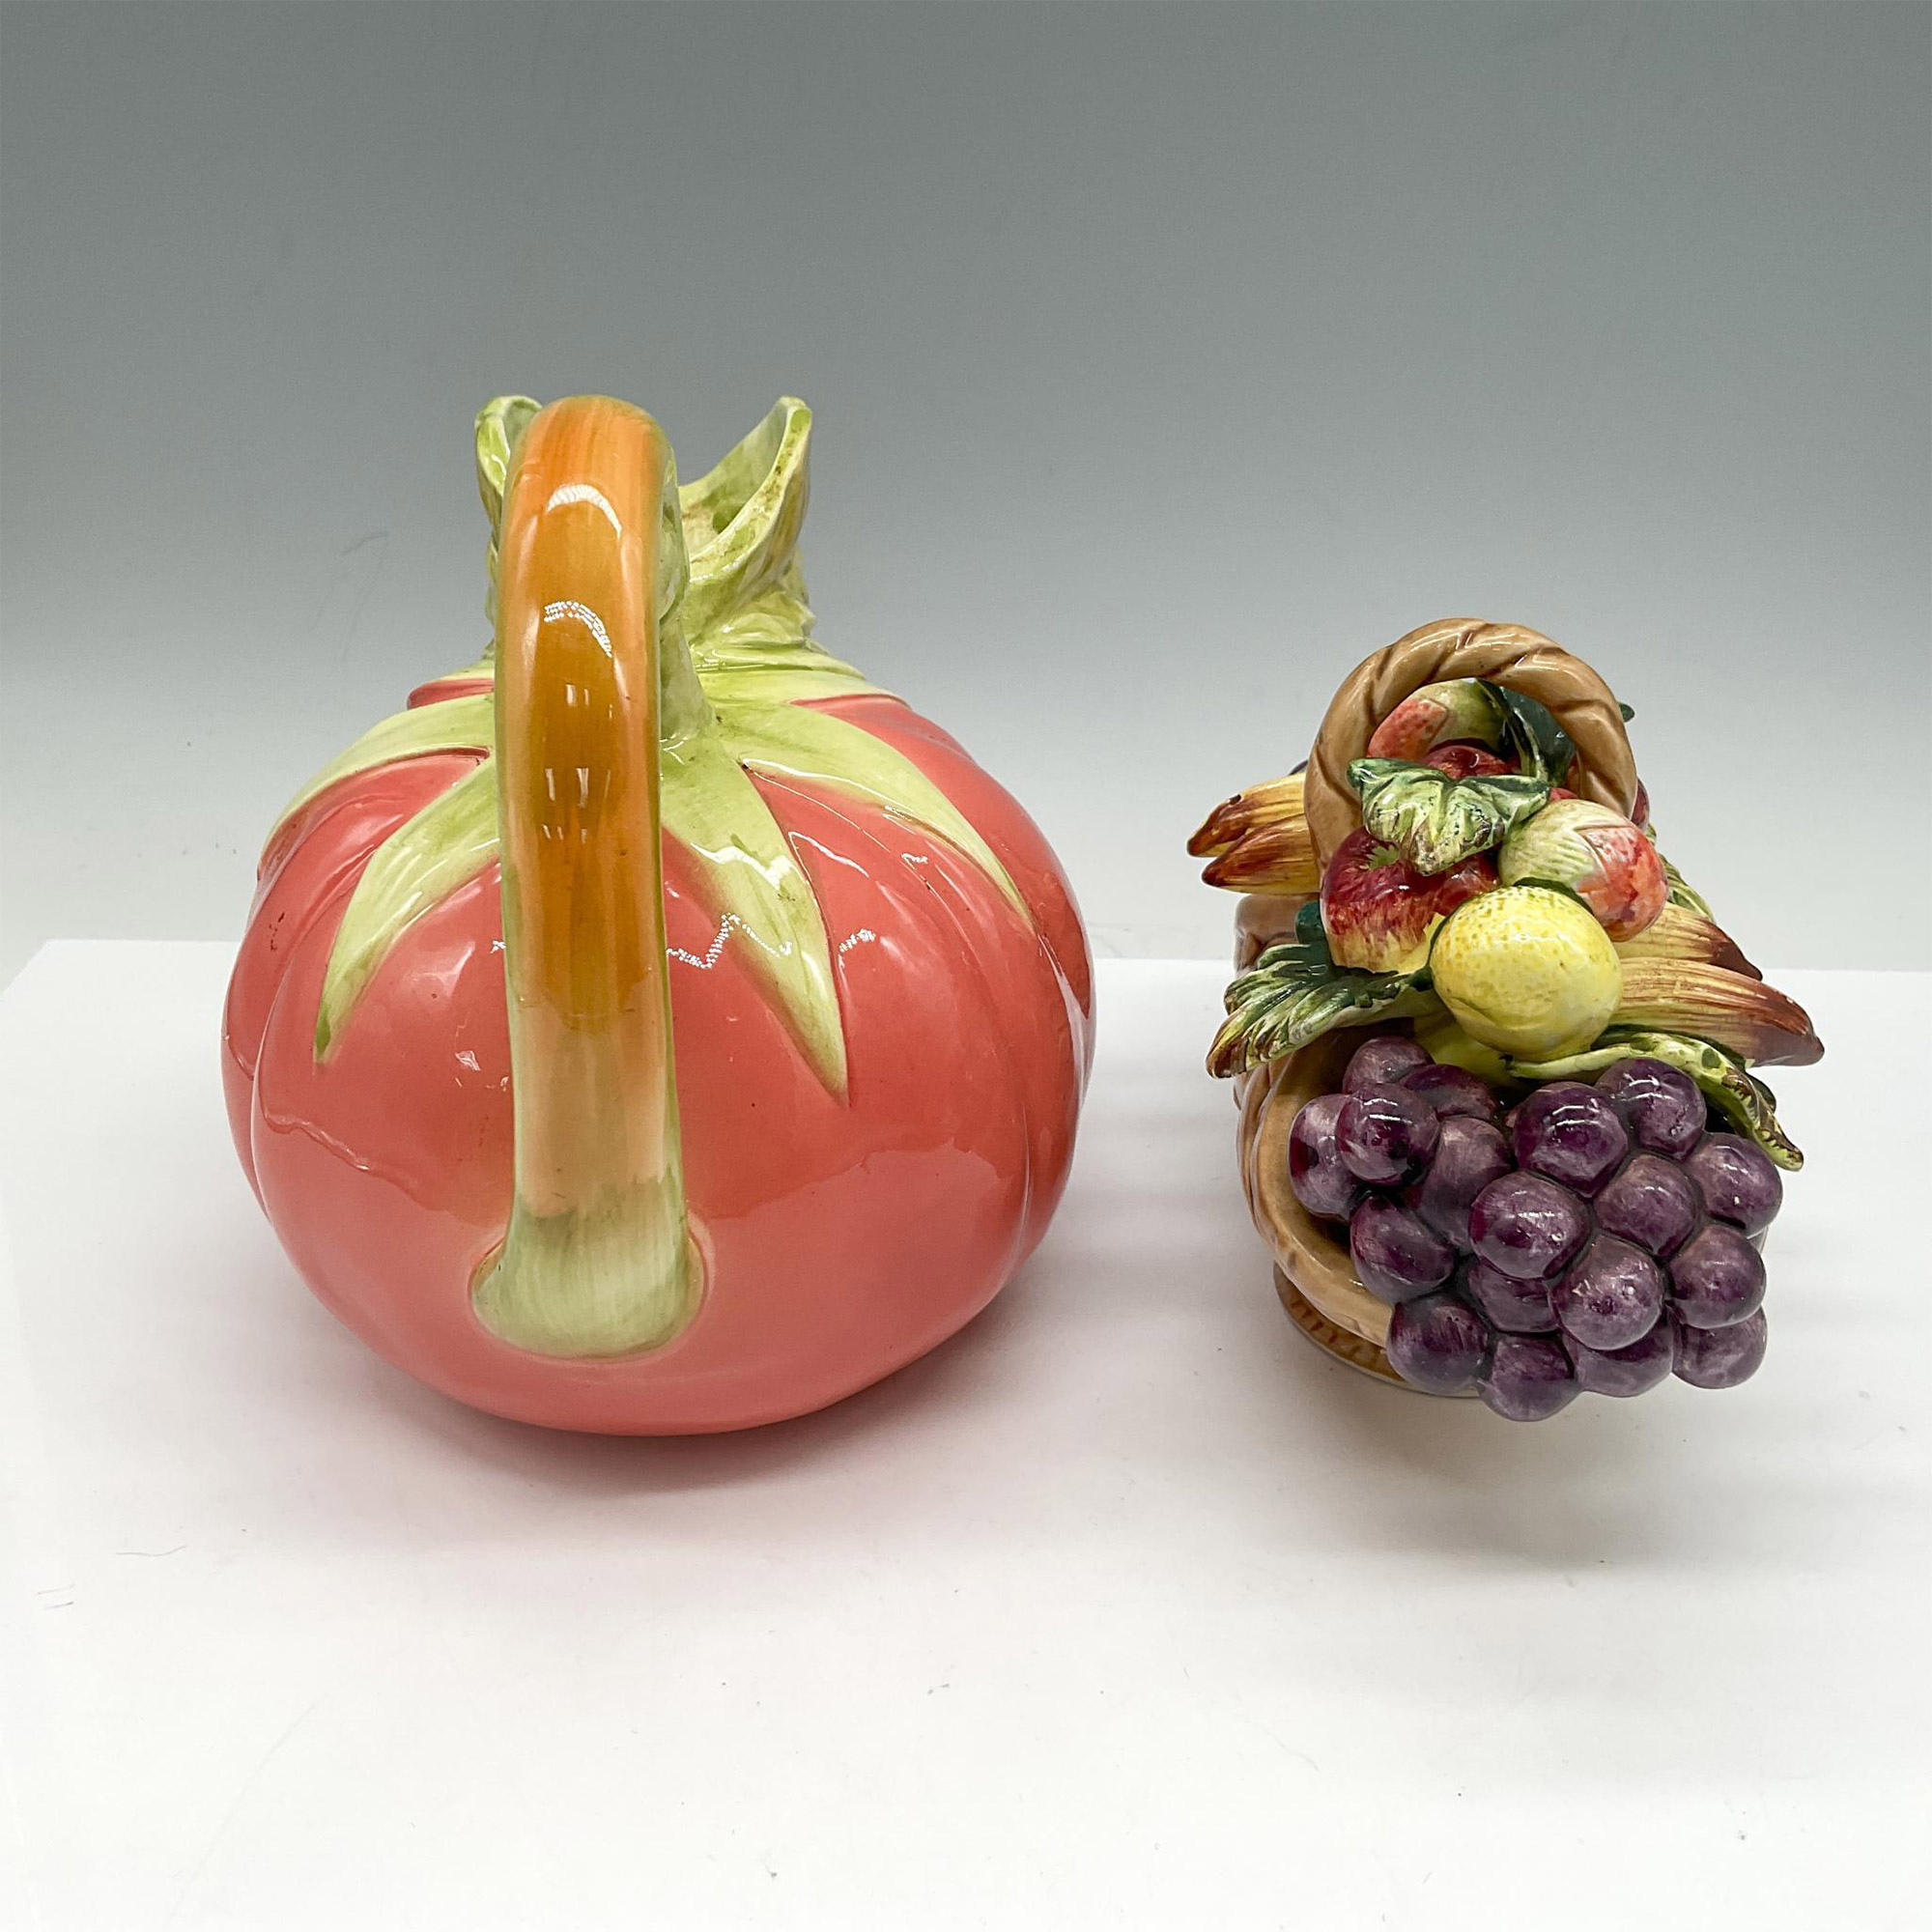 2pc The Heldon Group Ceramic Pitcher + Fruit Basket - Image 3 of 4